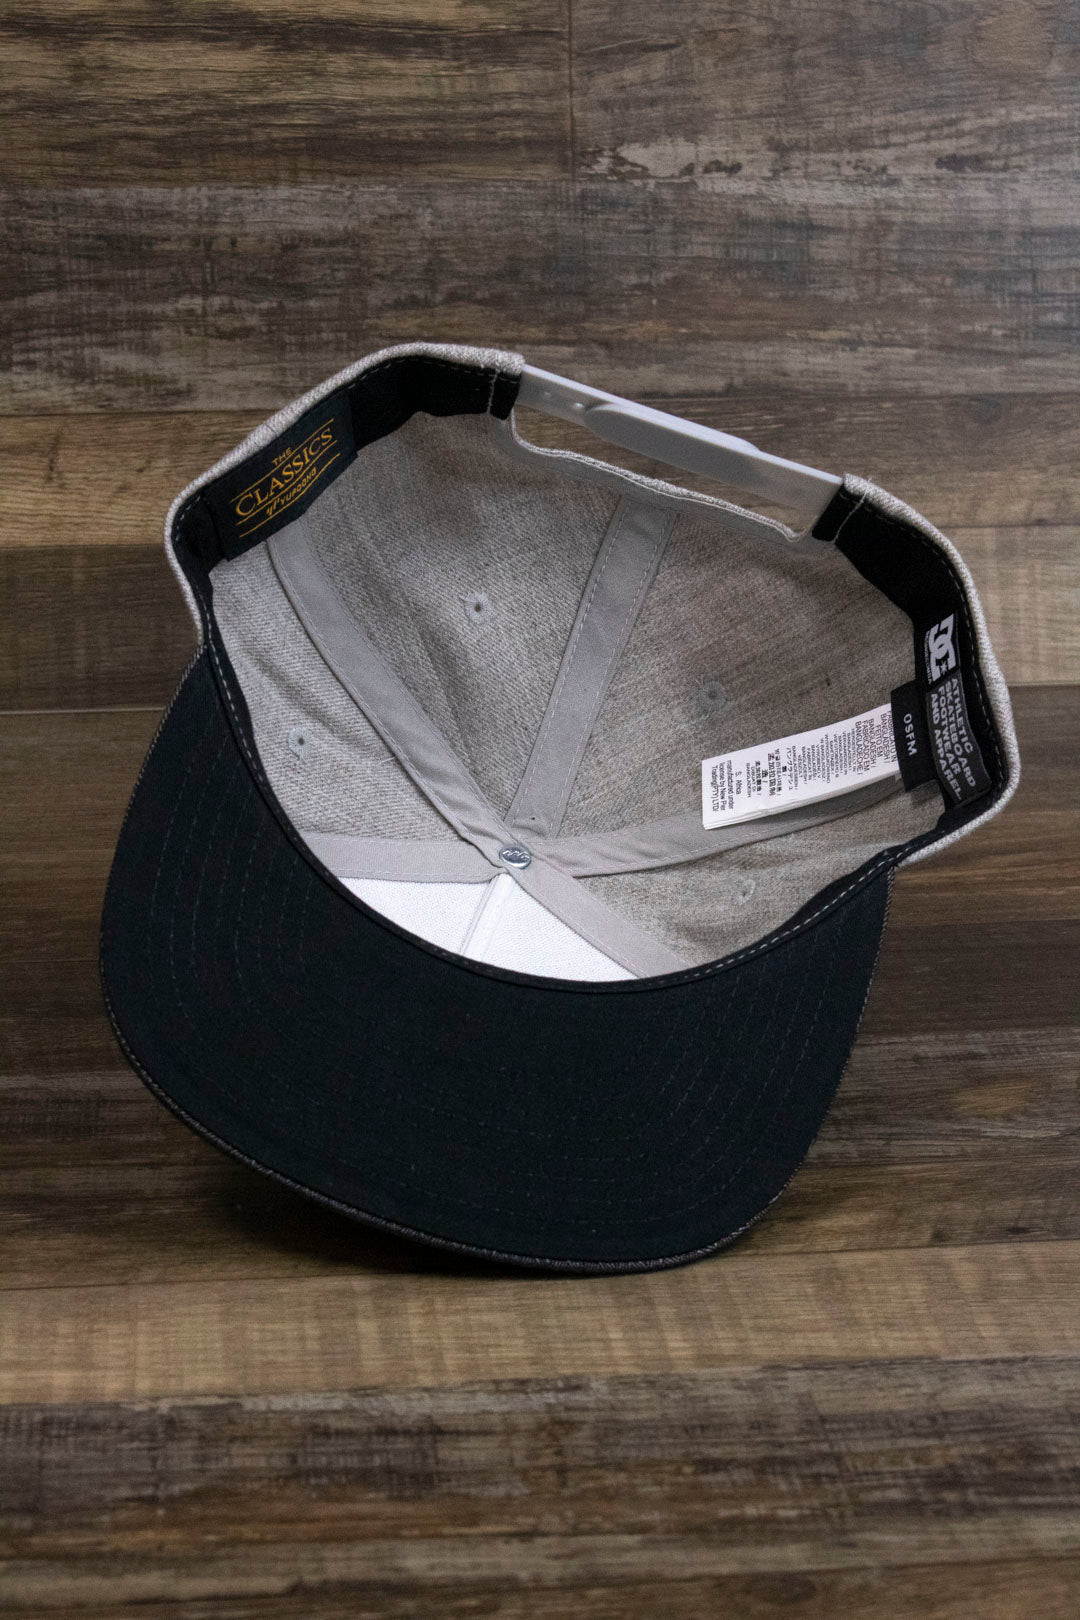 the 2-Tone Gray Snapback Skater Hat | DC Shoes Black Bottom Snap Back Cap has a black underbrim